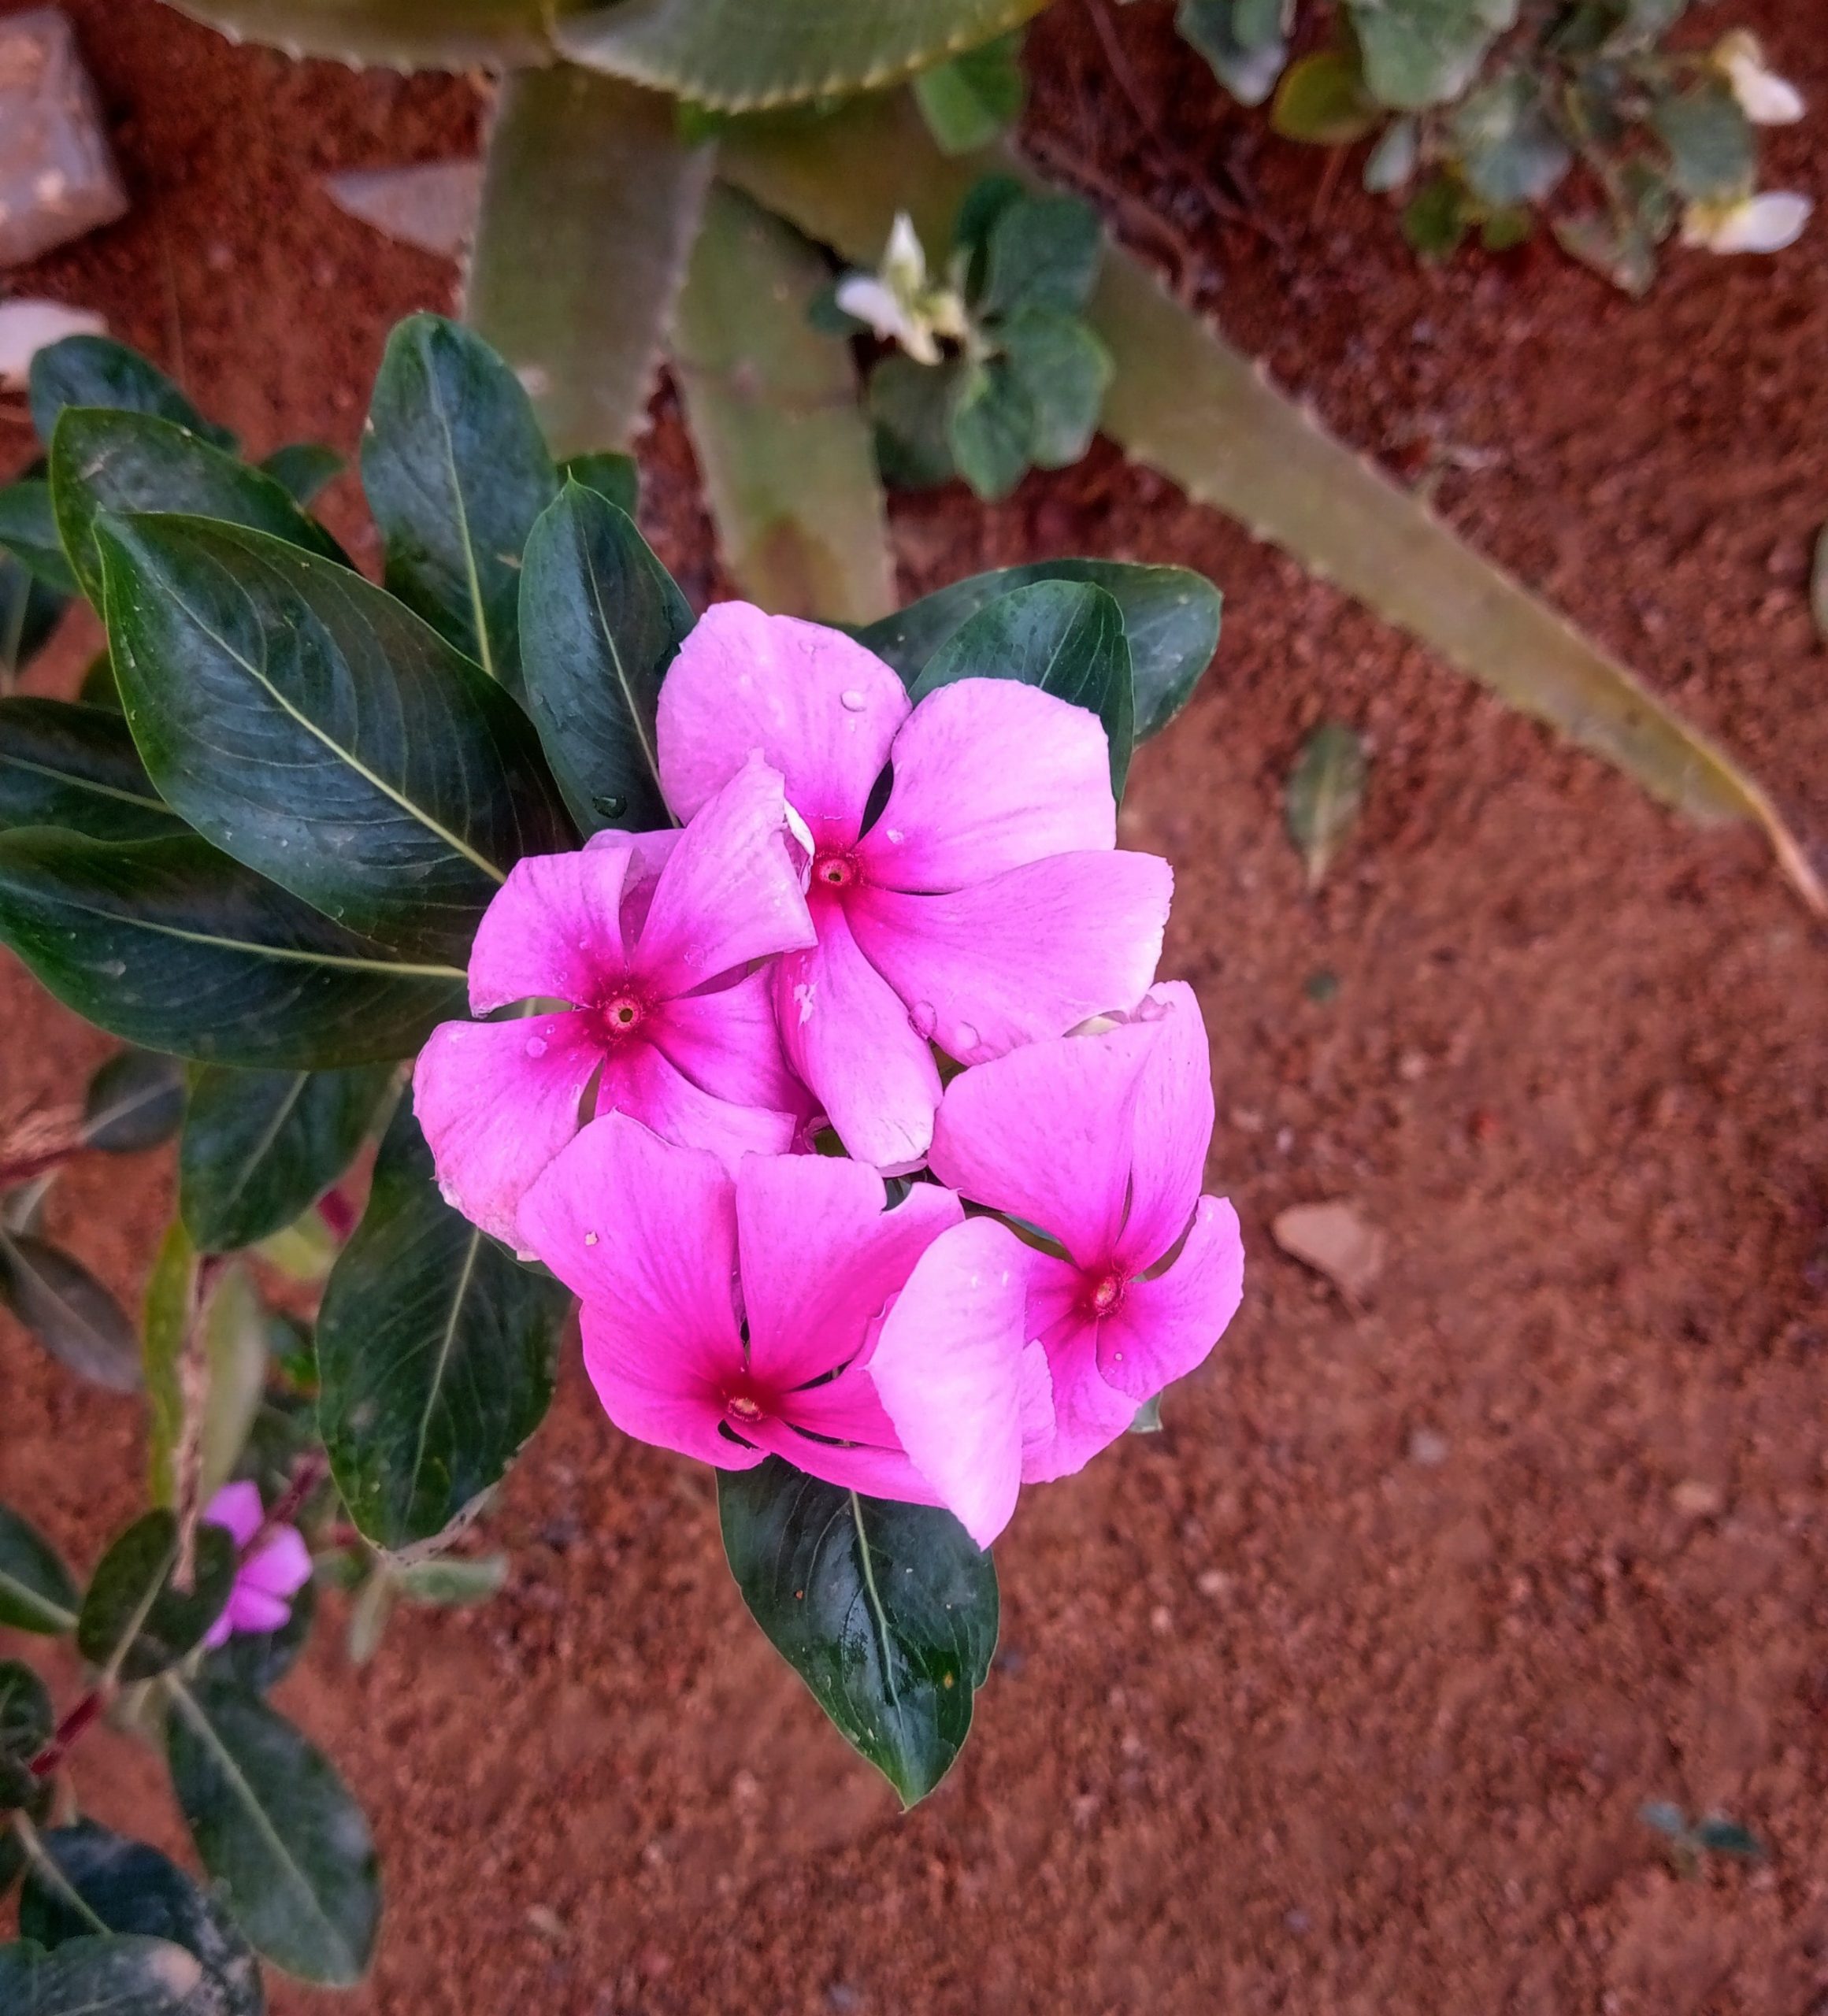 Flowering plant